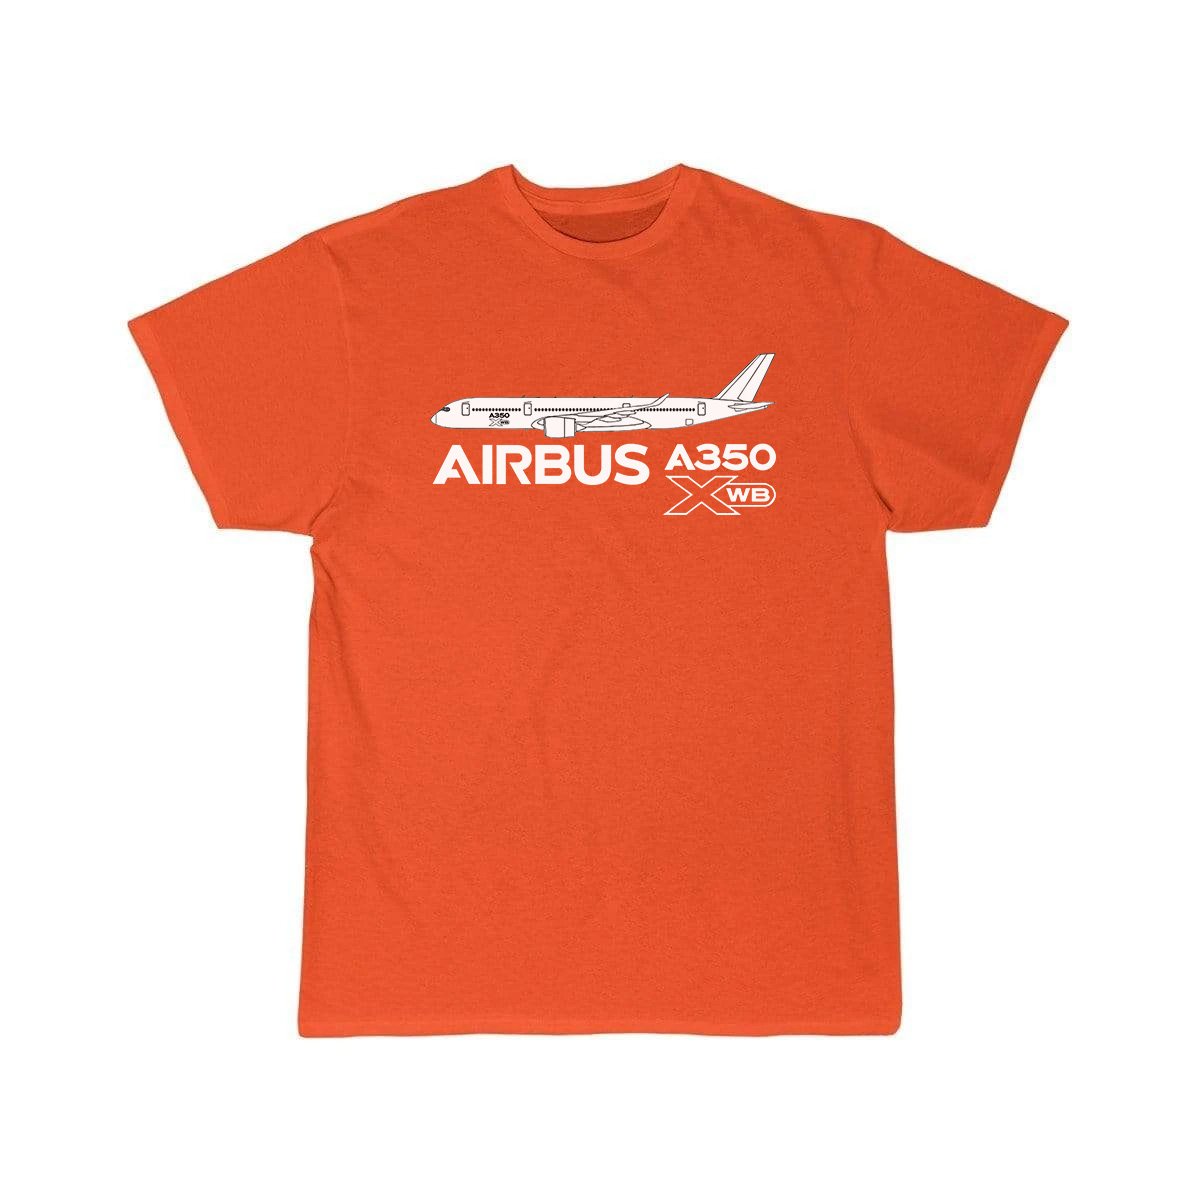 Airbus A350 XWB Aviation Pilot T-Shirt THE AV8R